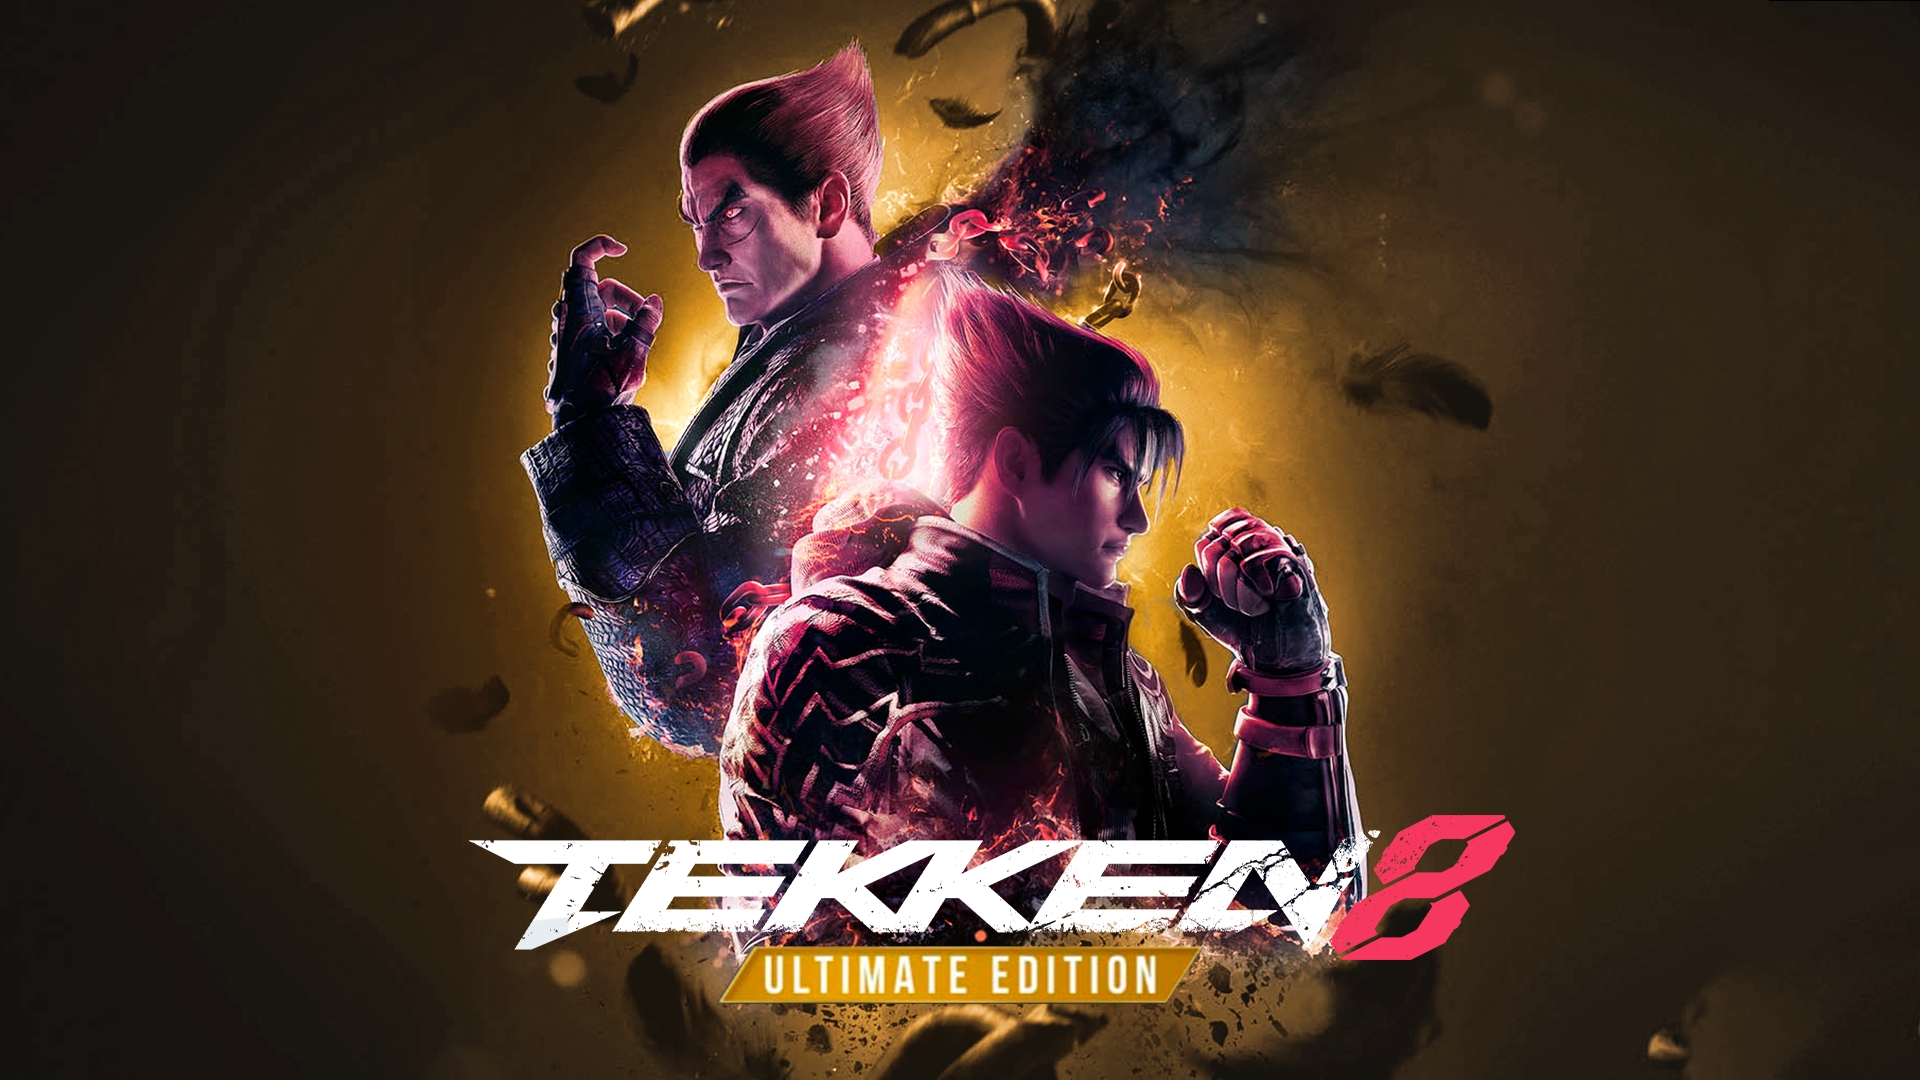 Tekken 7 - Ultimate Edition